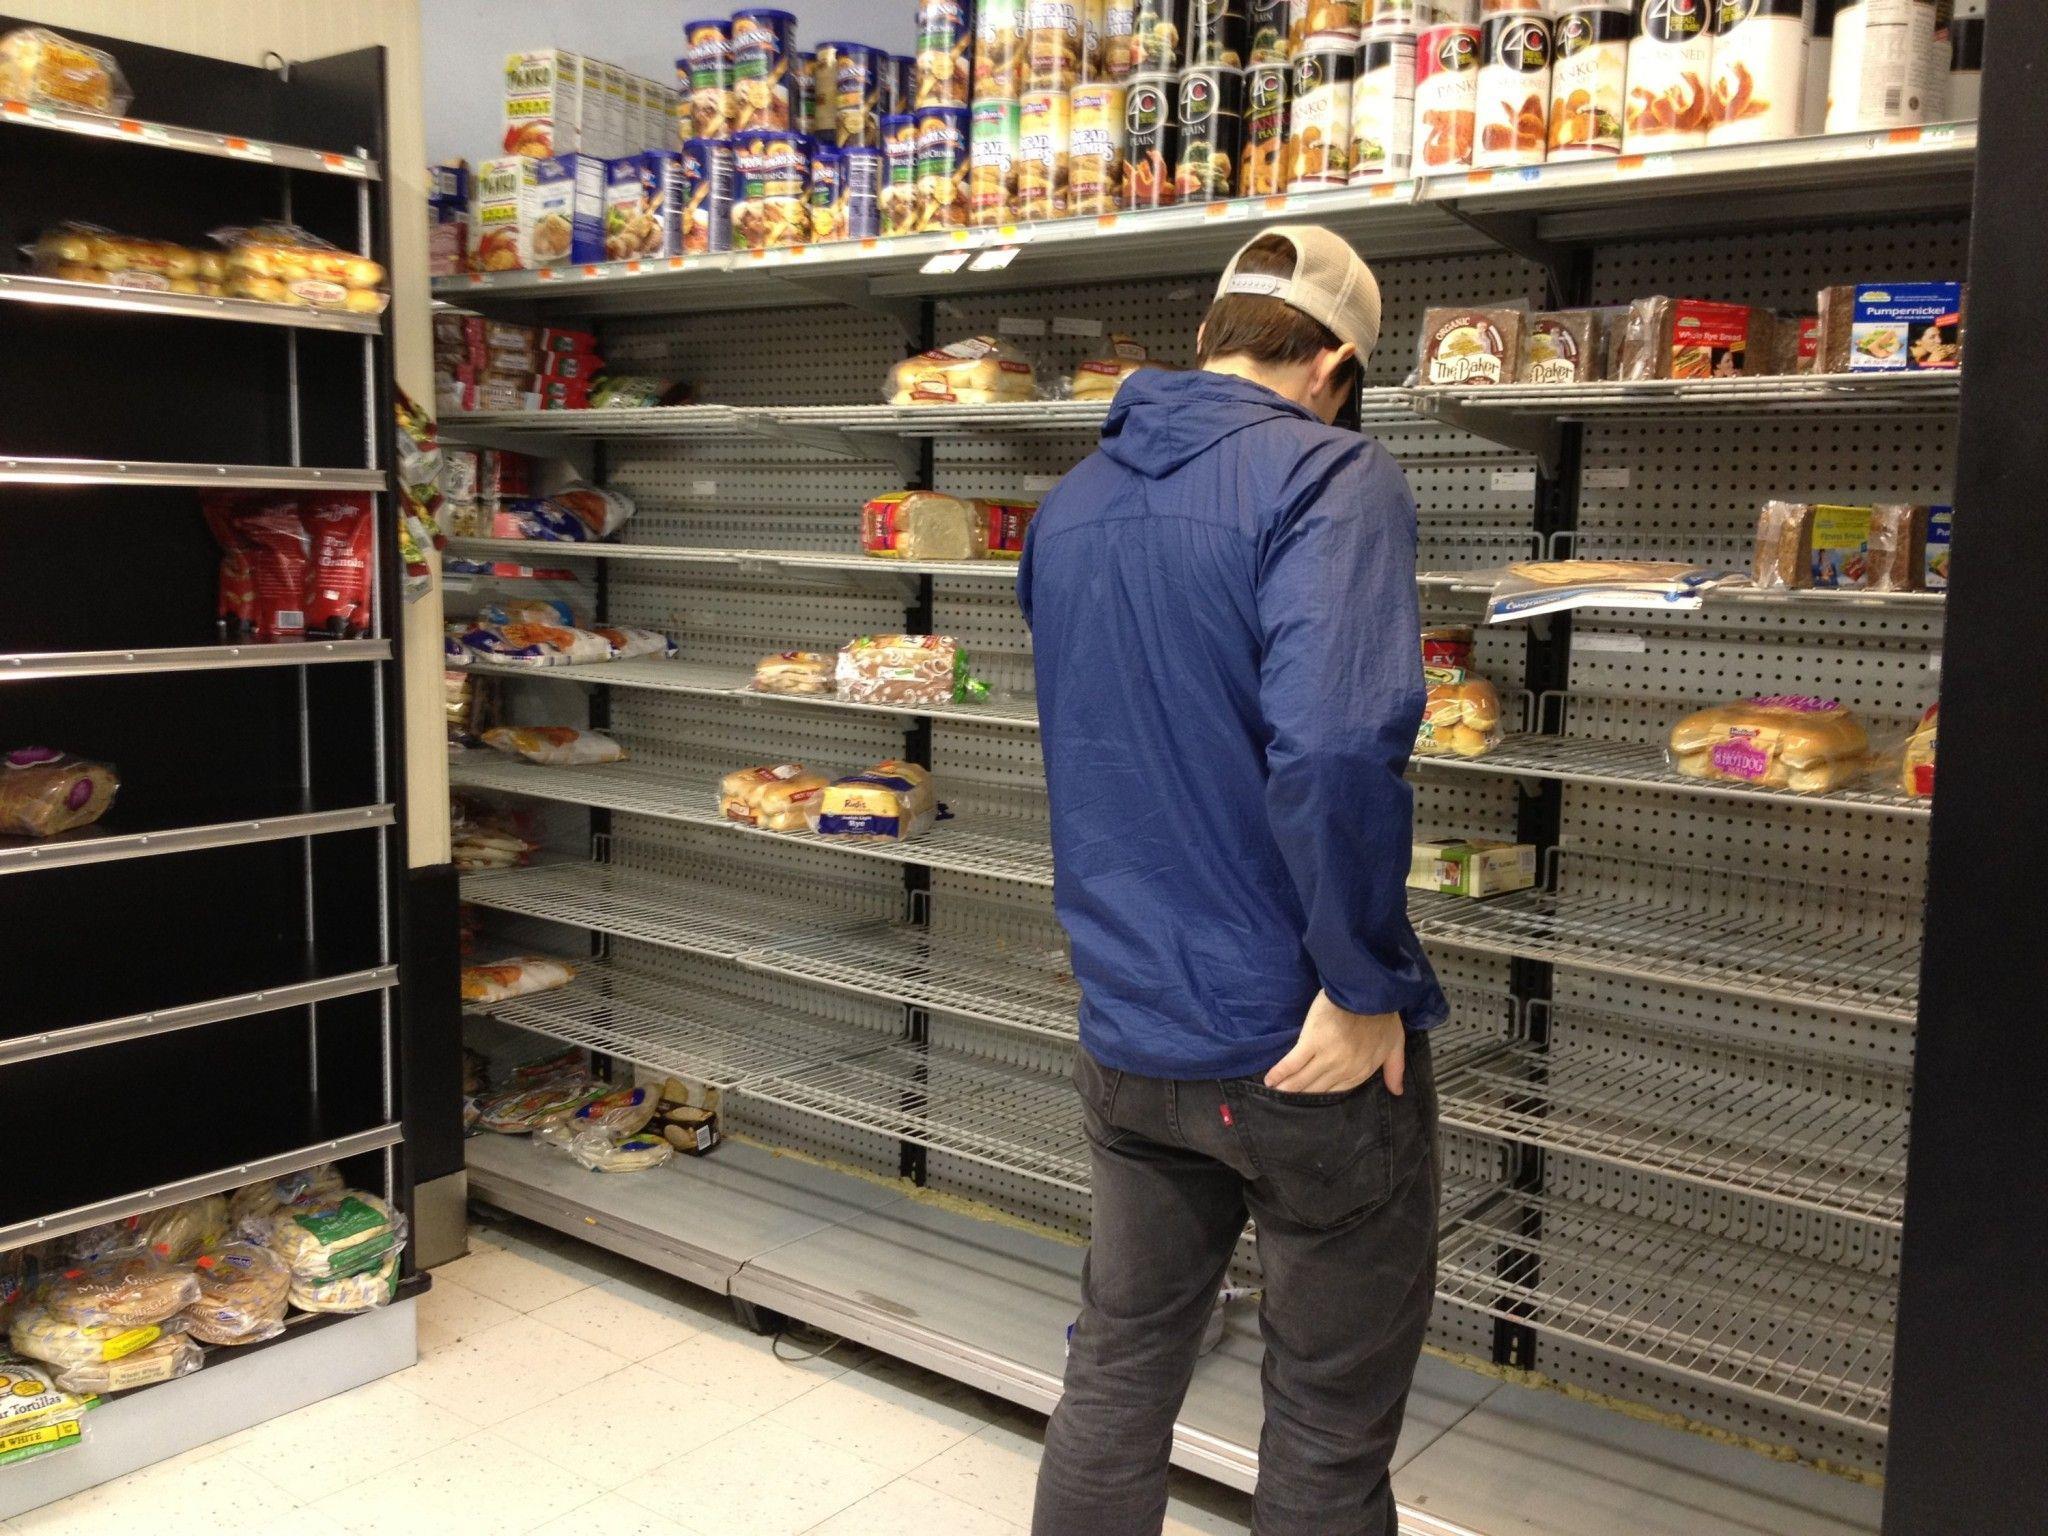 Hamsterkäufe in Supermärkten und Drogeriegeschäften vor Hurrikan "Sandy".